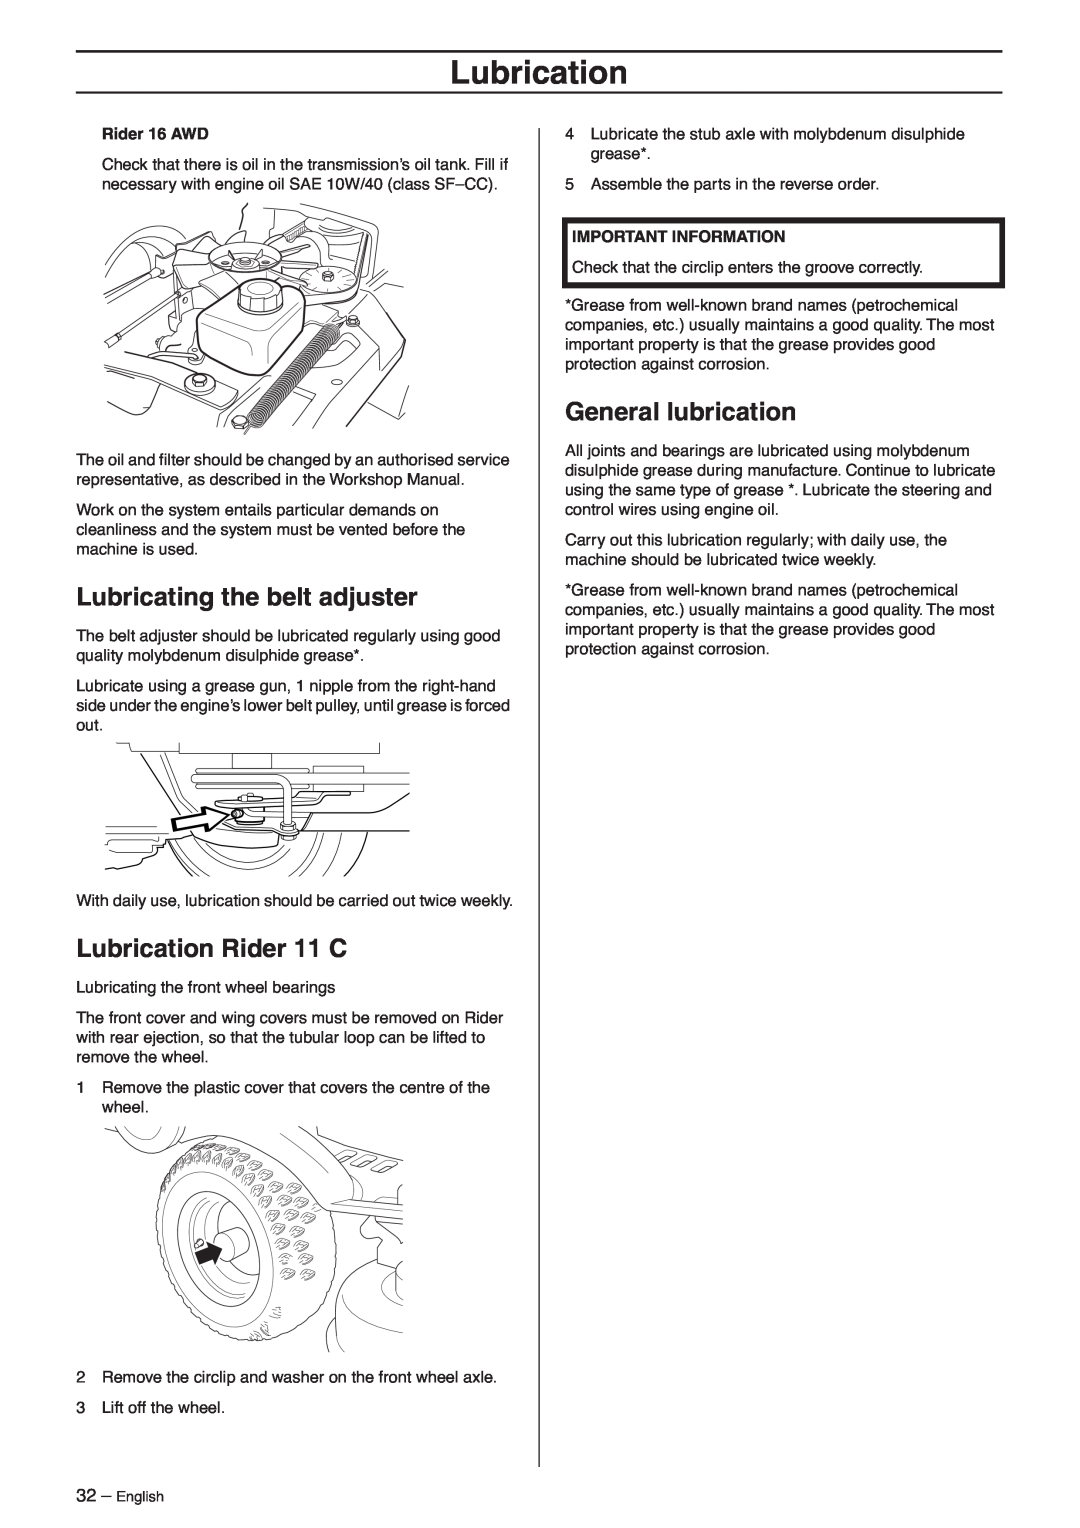 Husqvarna 13 C, 16 C manual Lubricating the belt adjuster, Lubrication Rider 11 C, General lubrication, Rider 16 AWD 